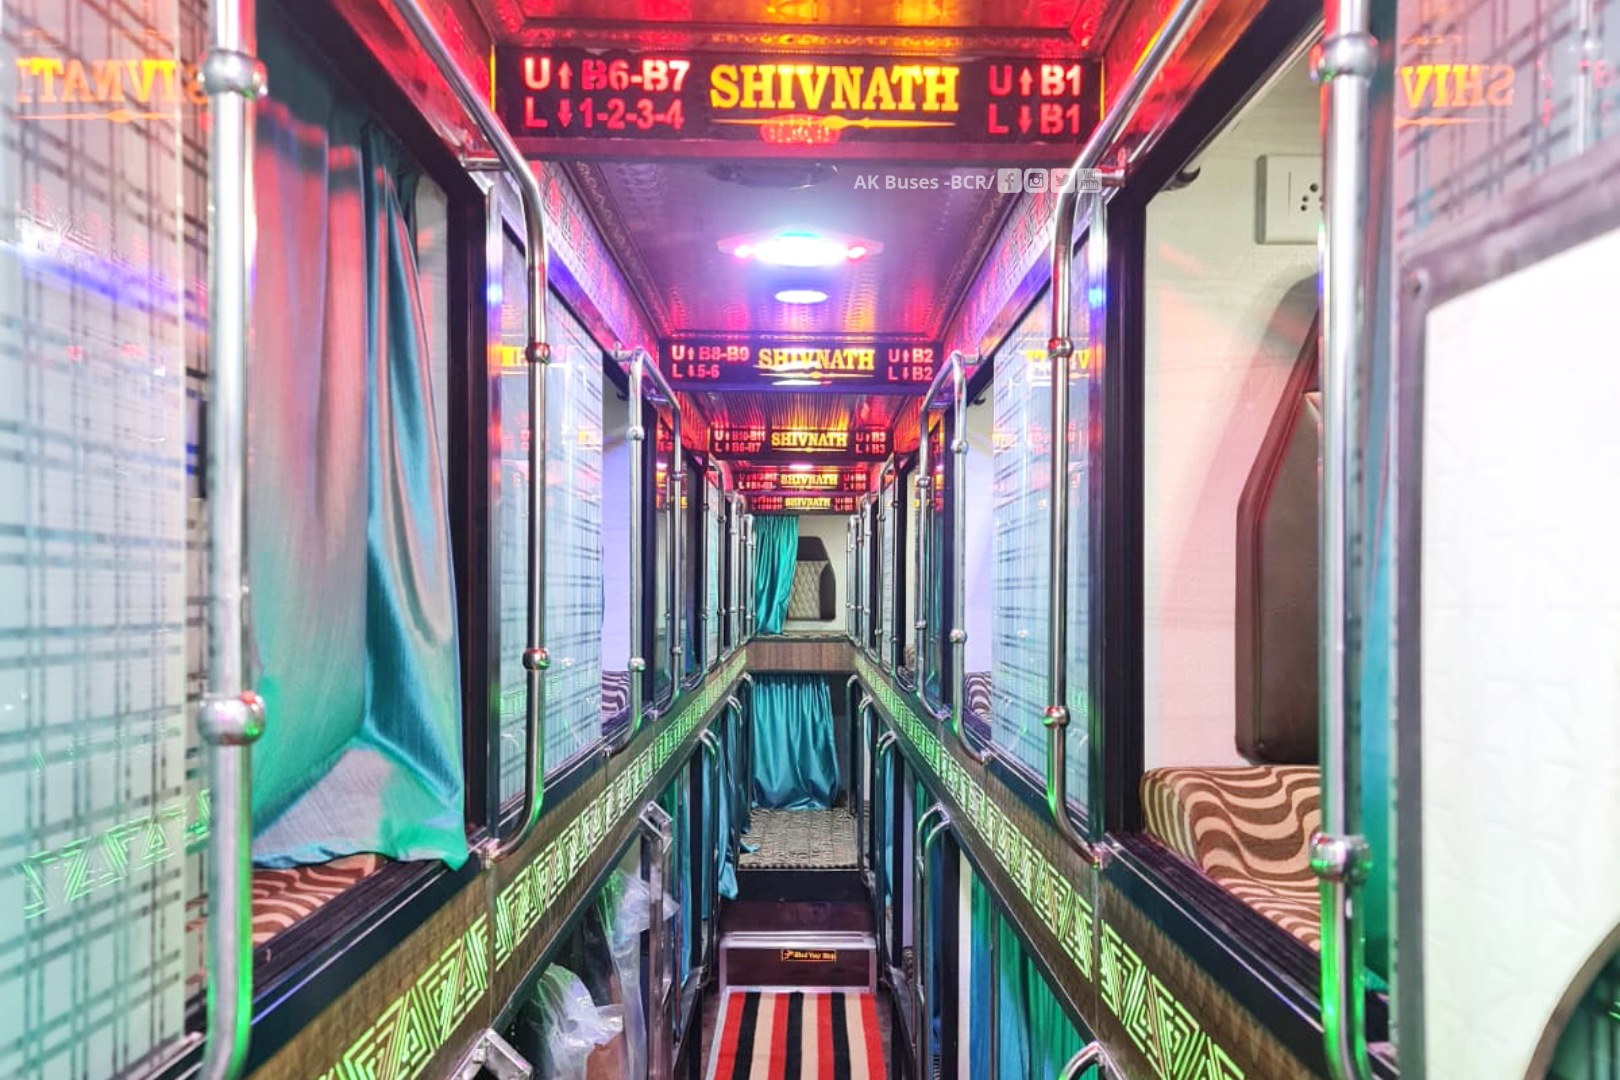 shivnath bus interior